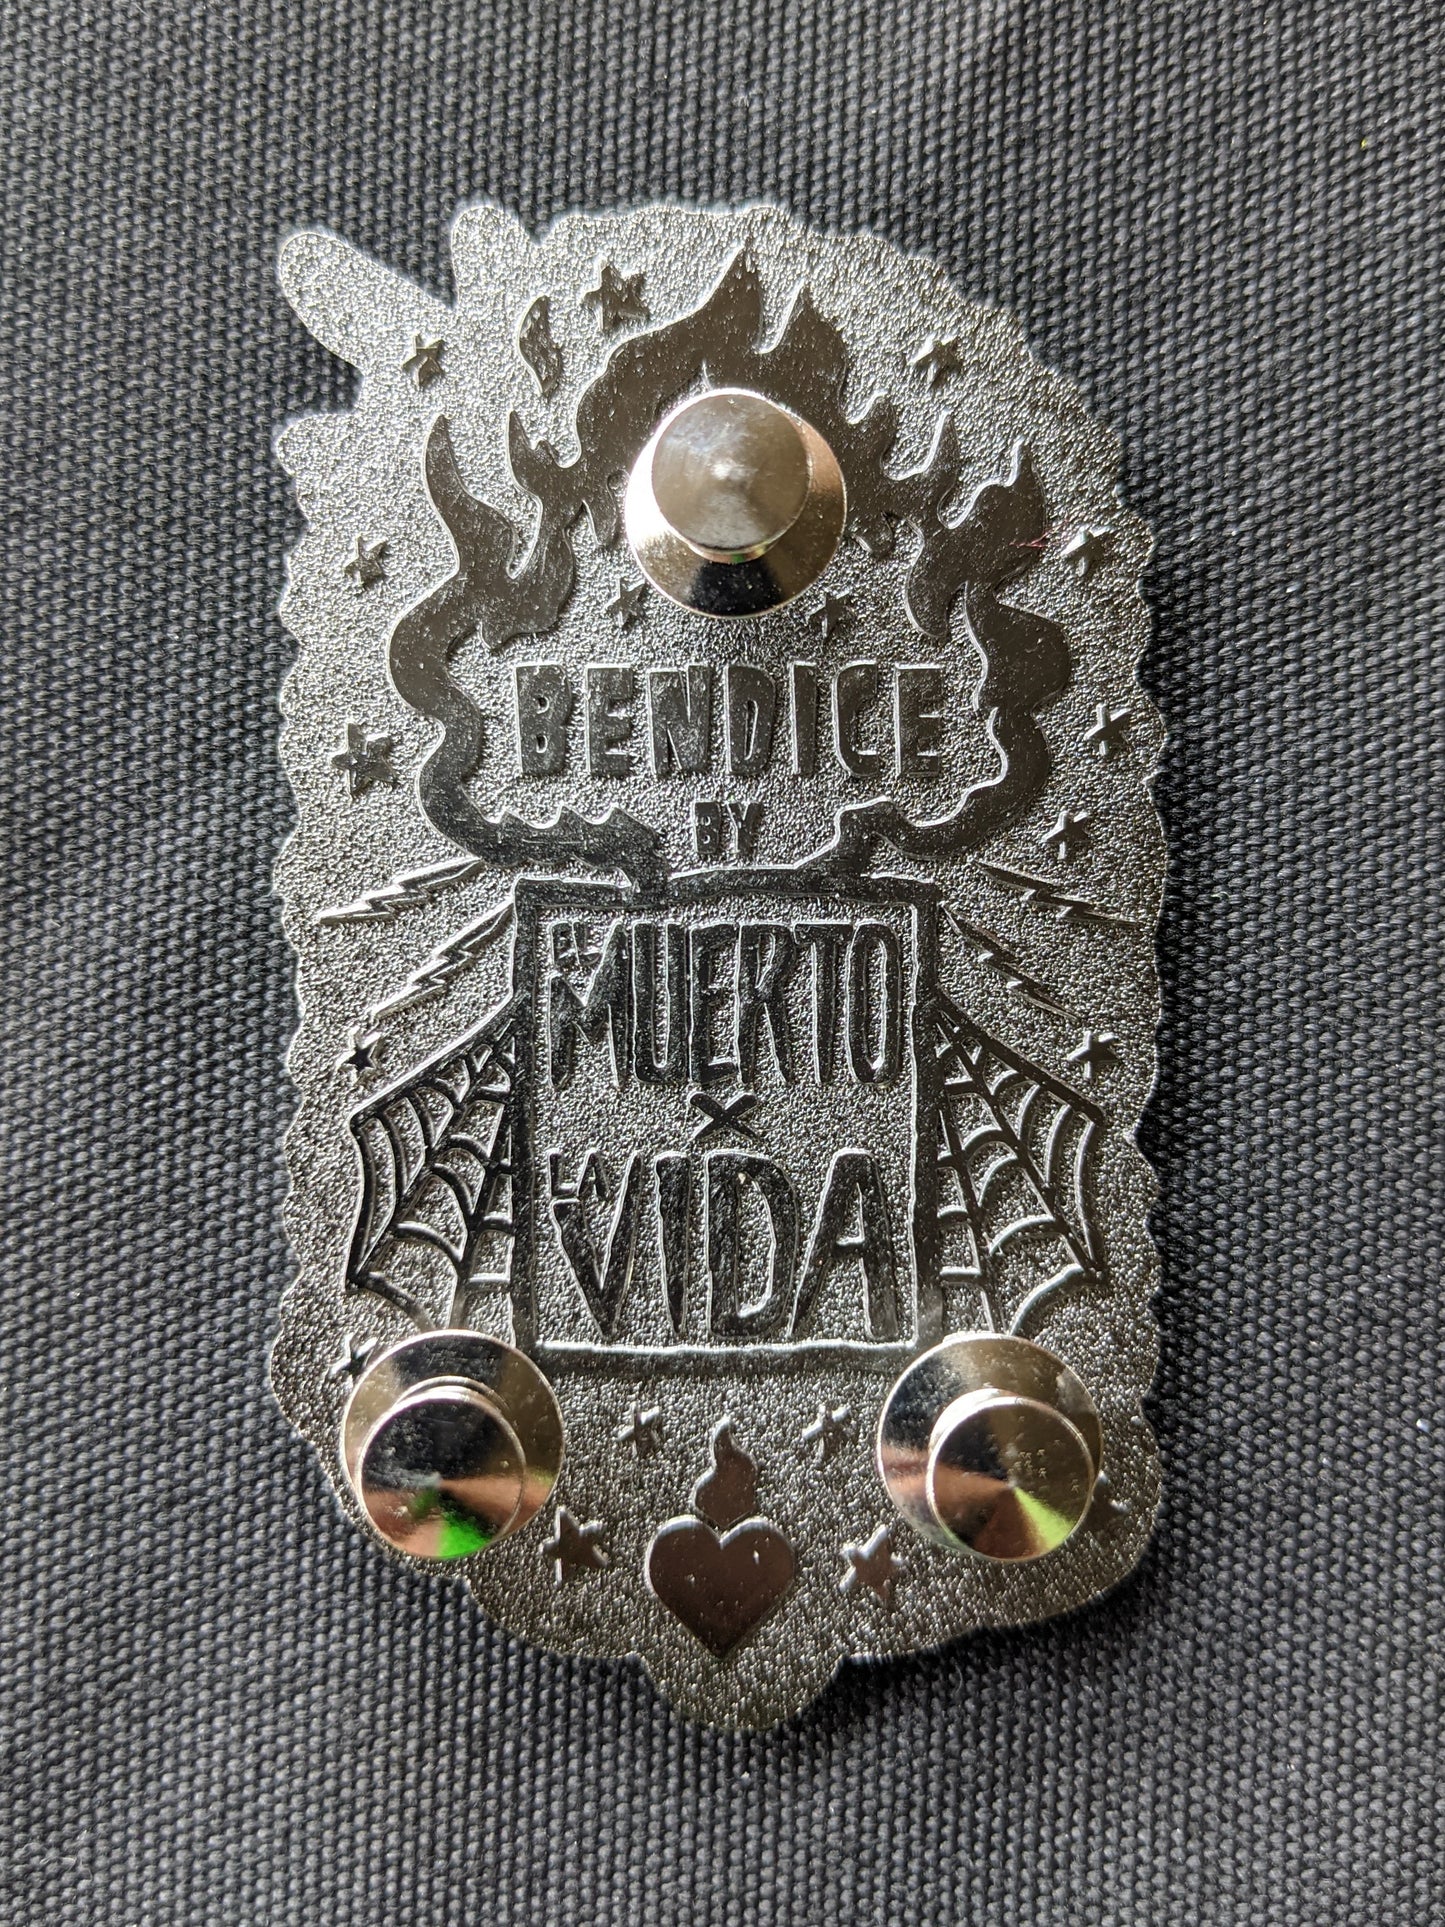 Bendice, a Day of the Dead enamel pin